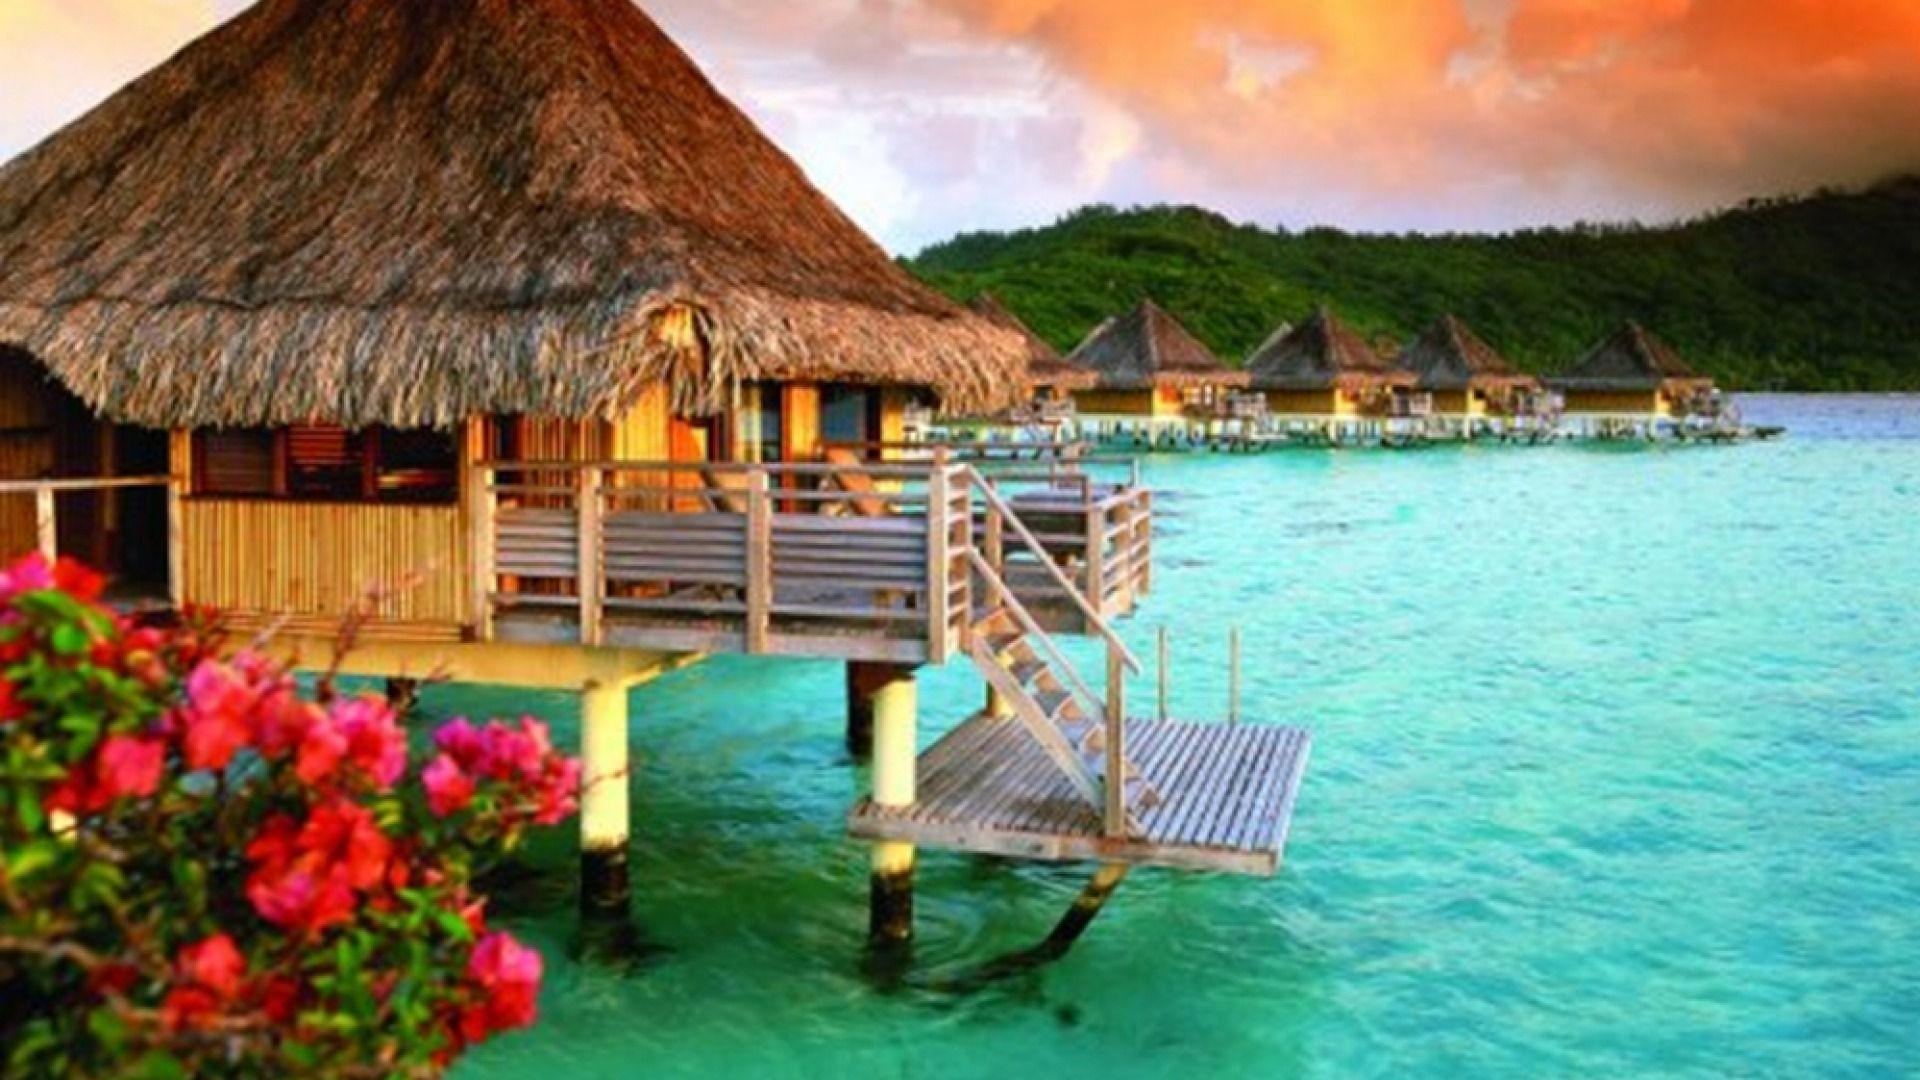 Bora Bora Island Full & Free High Quality Background